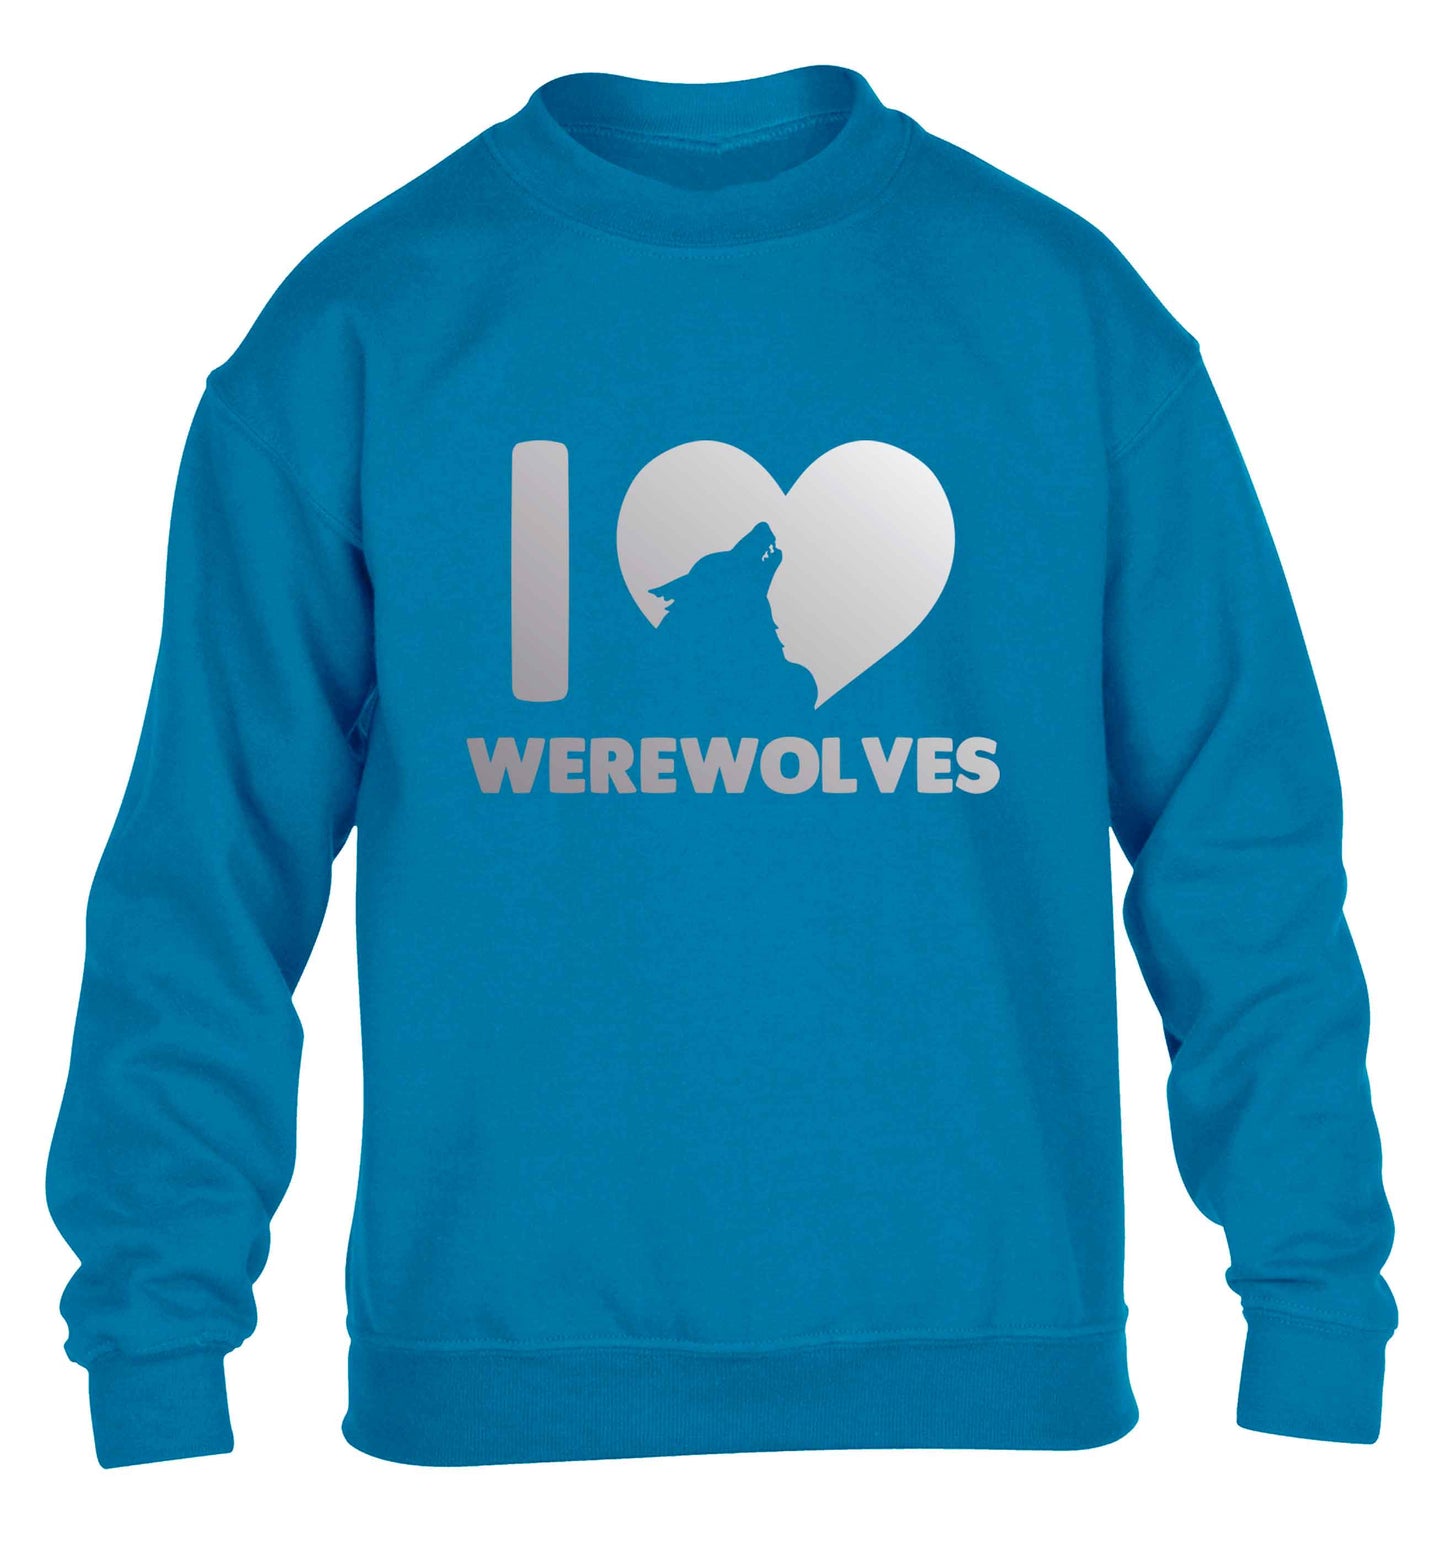 I love werewolves children's blue sweater 12-13 Years